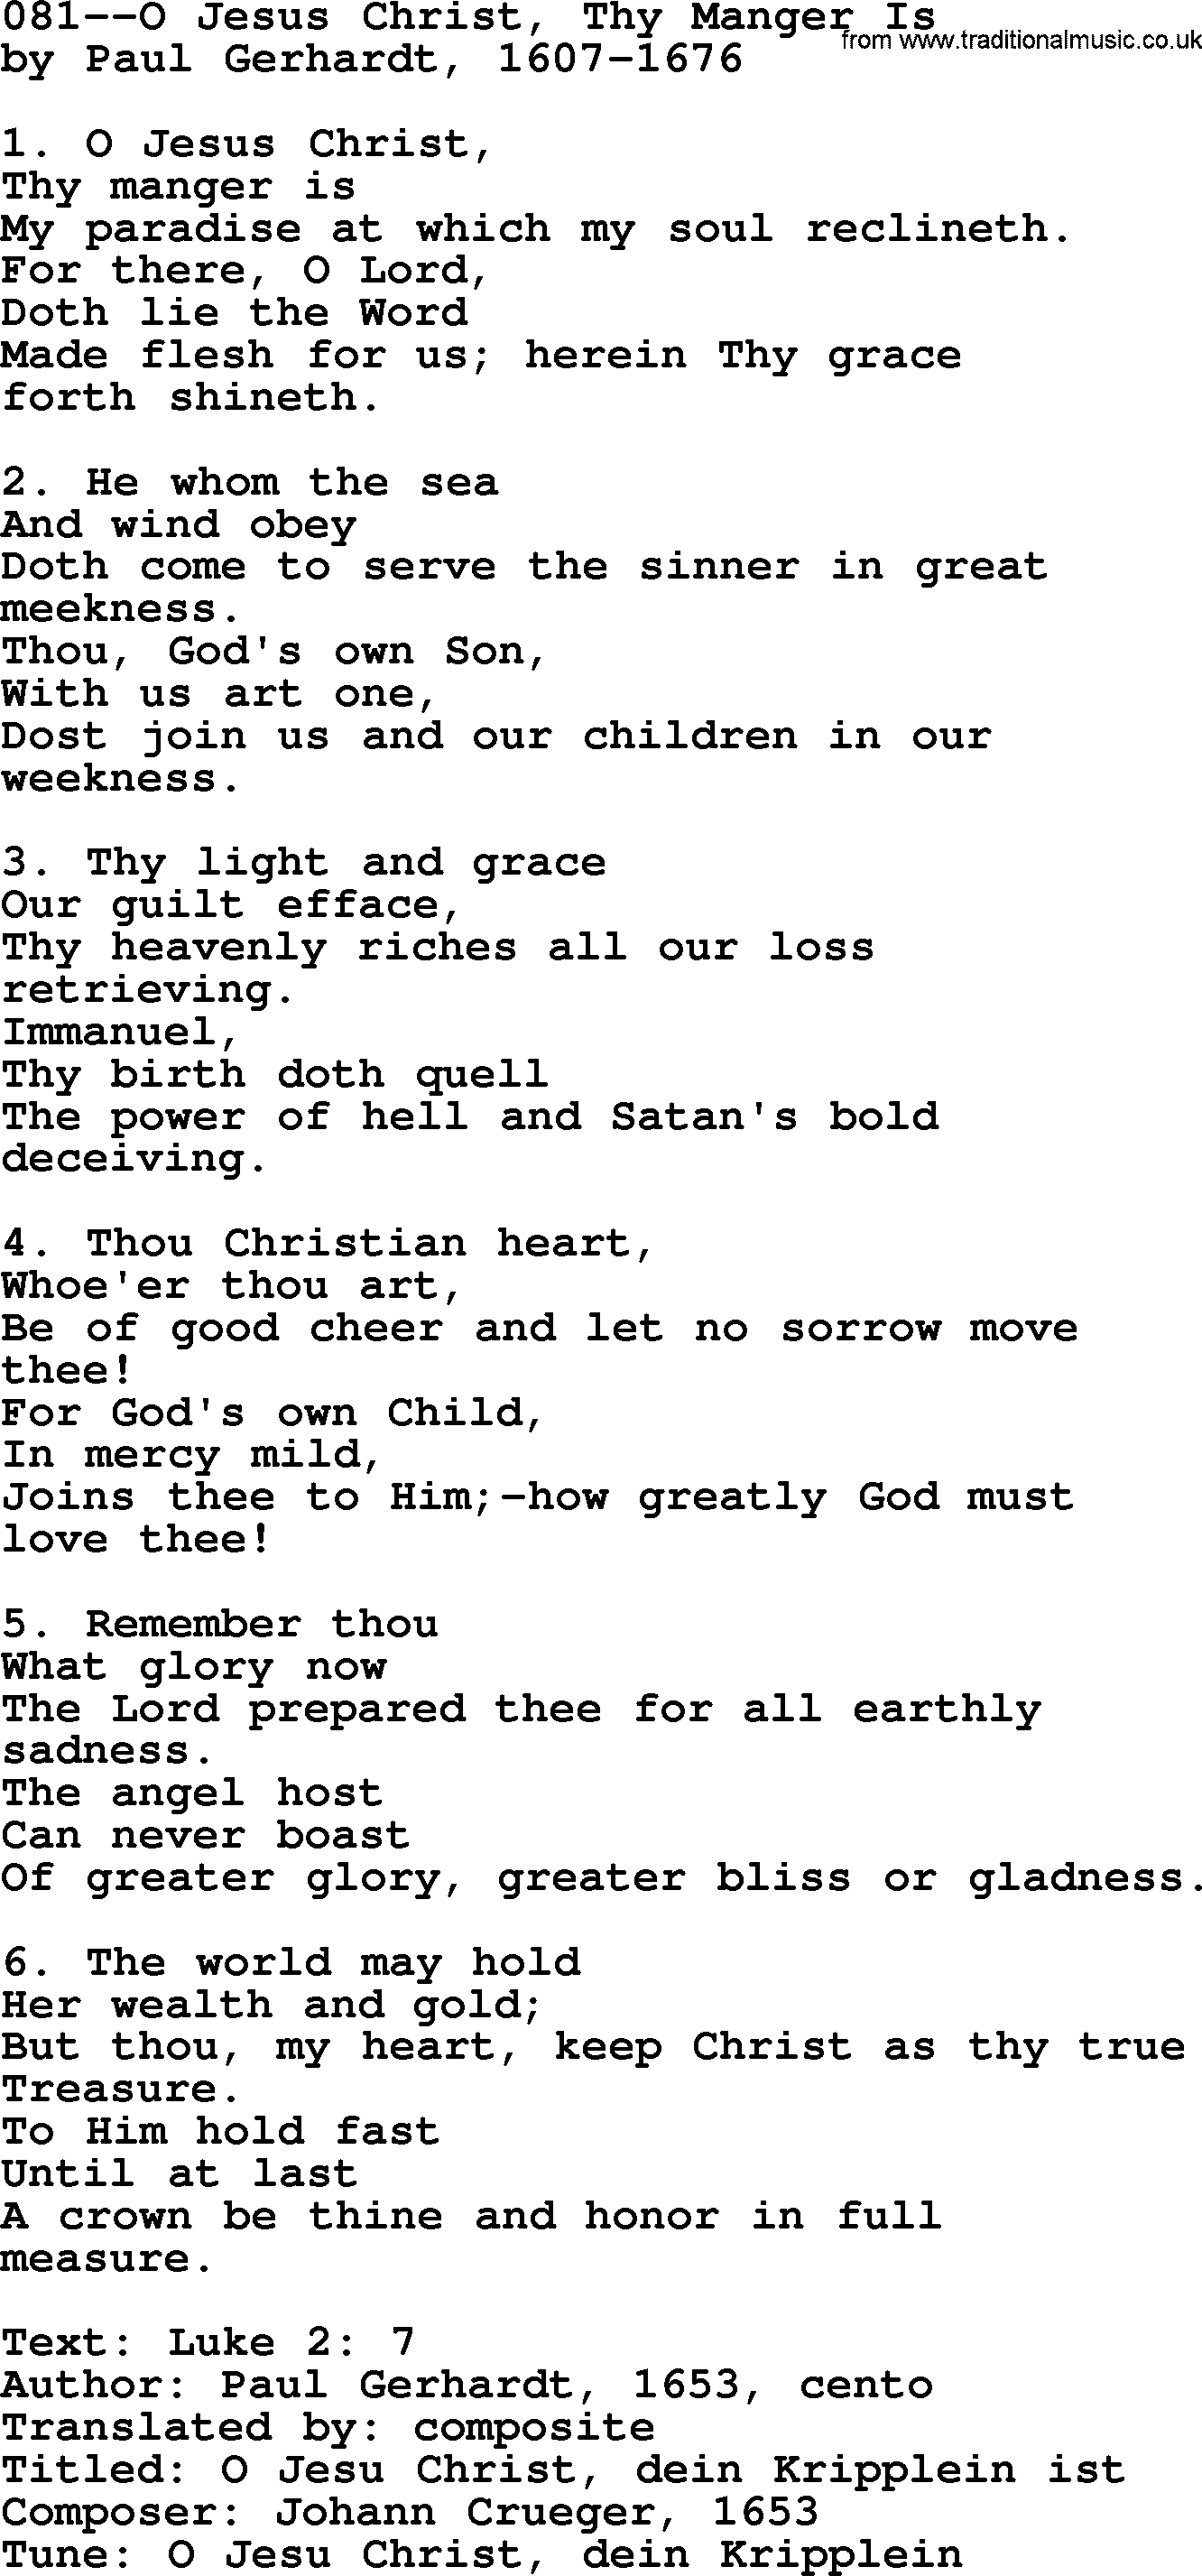 Lutheran Hymn: 081--O Jesus Christ, Thy Manger Is.txt lyrics with PDF